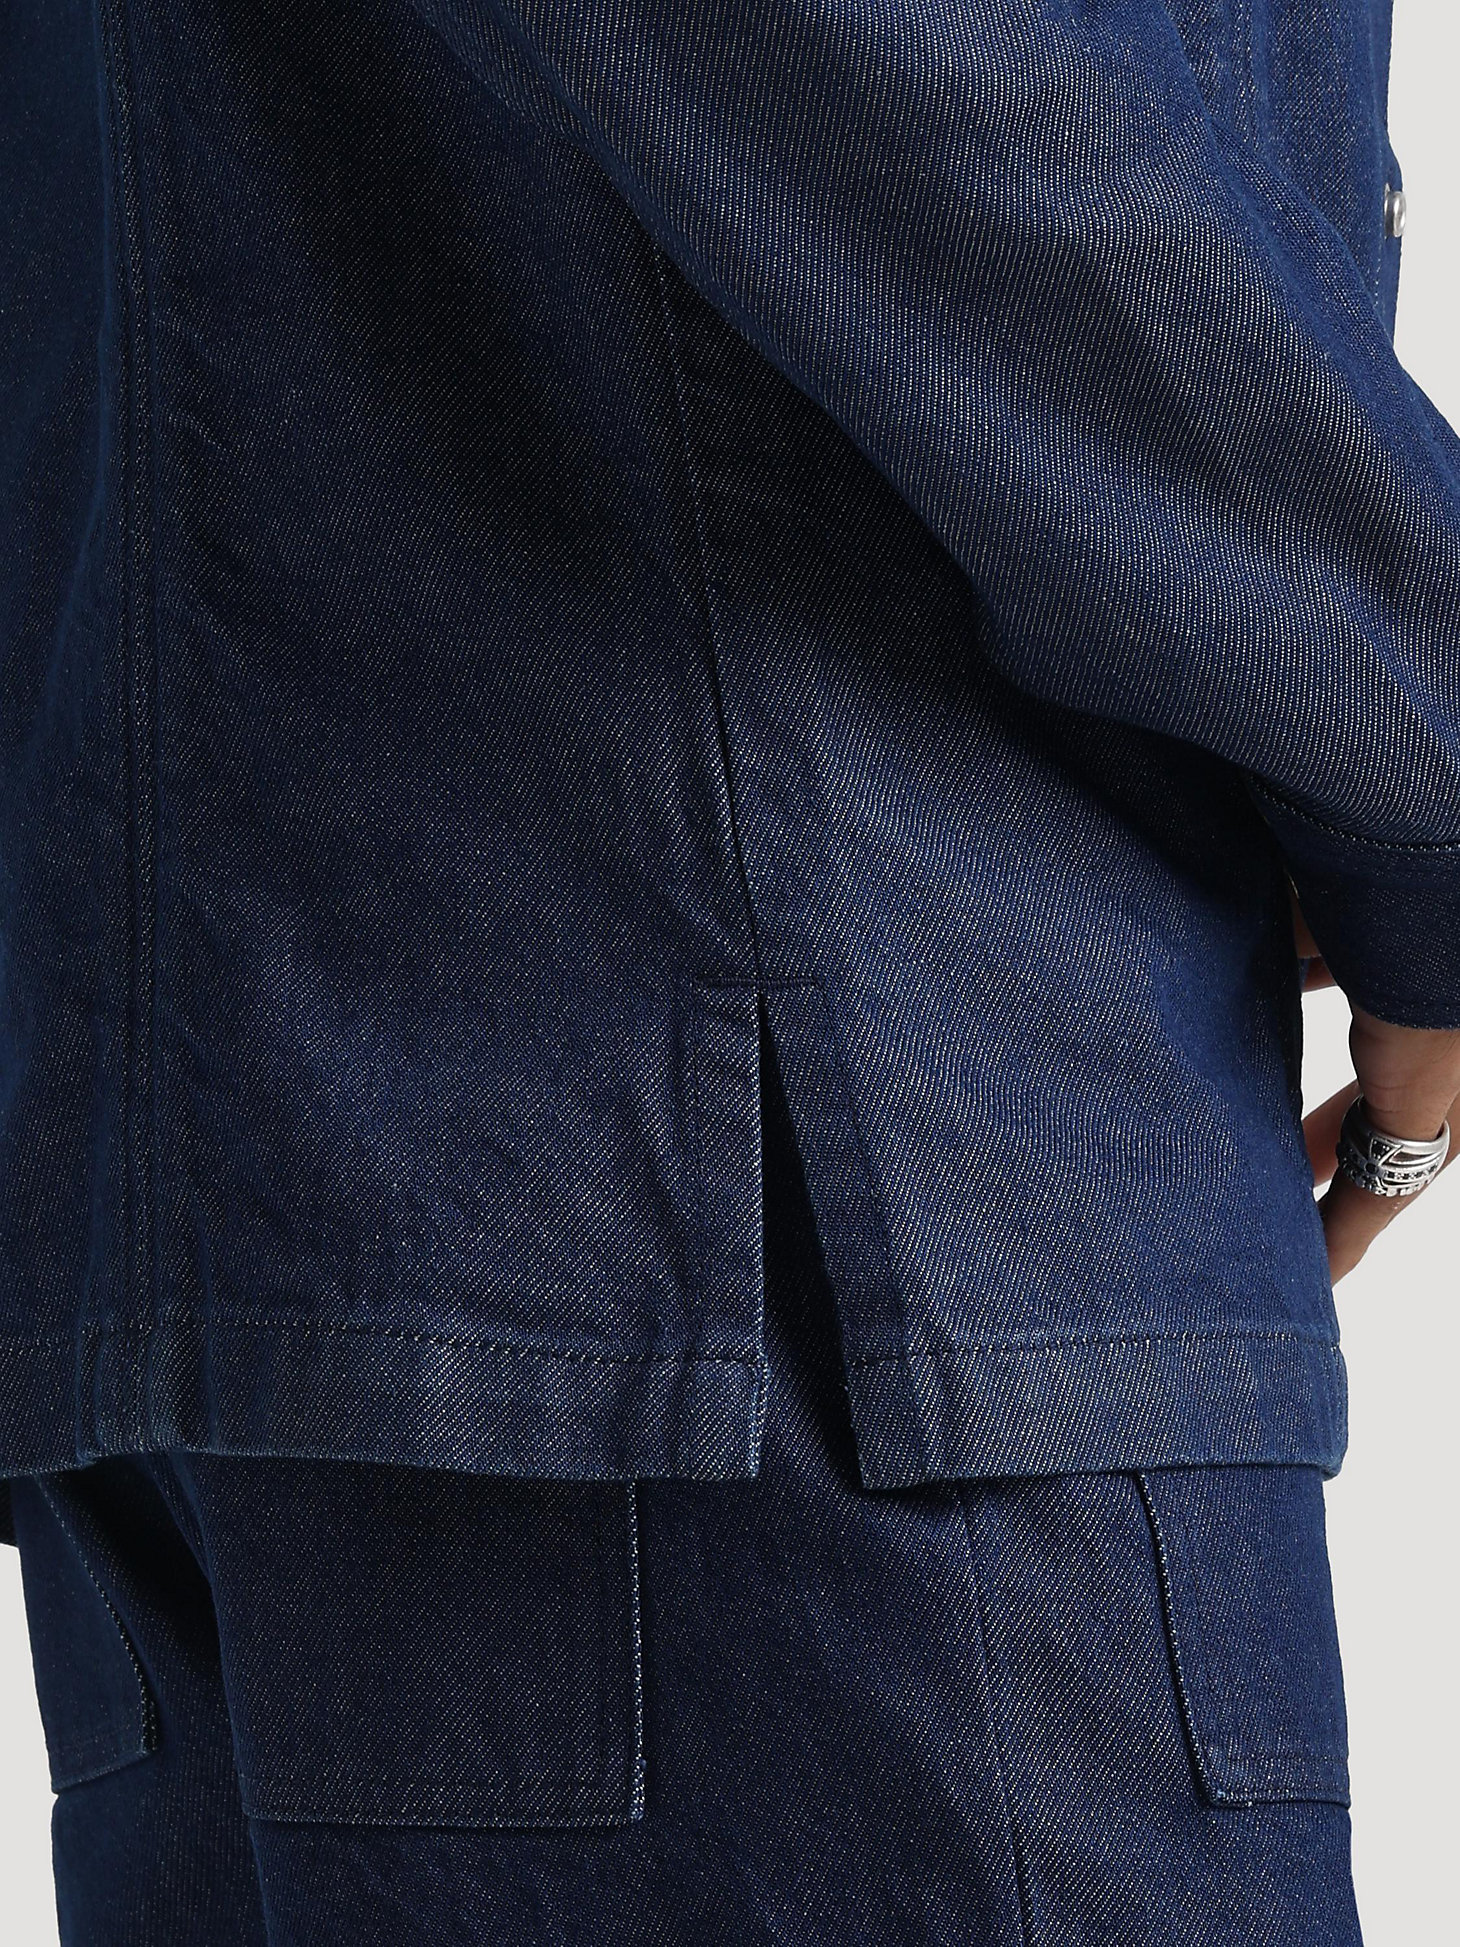 Wrangler X Leon Bridges Men's Denim Suit Jacket in Rinse Wash alternative view 4